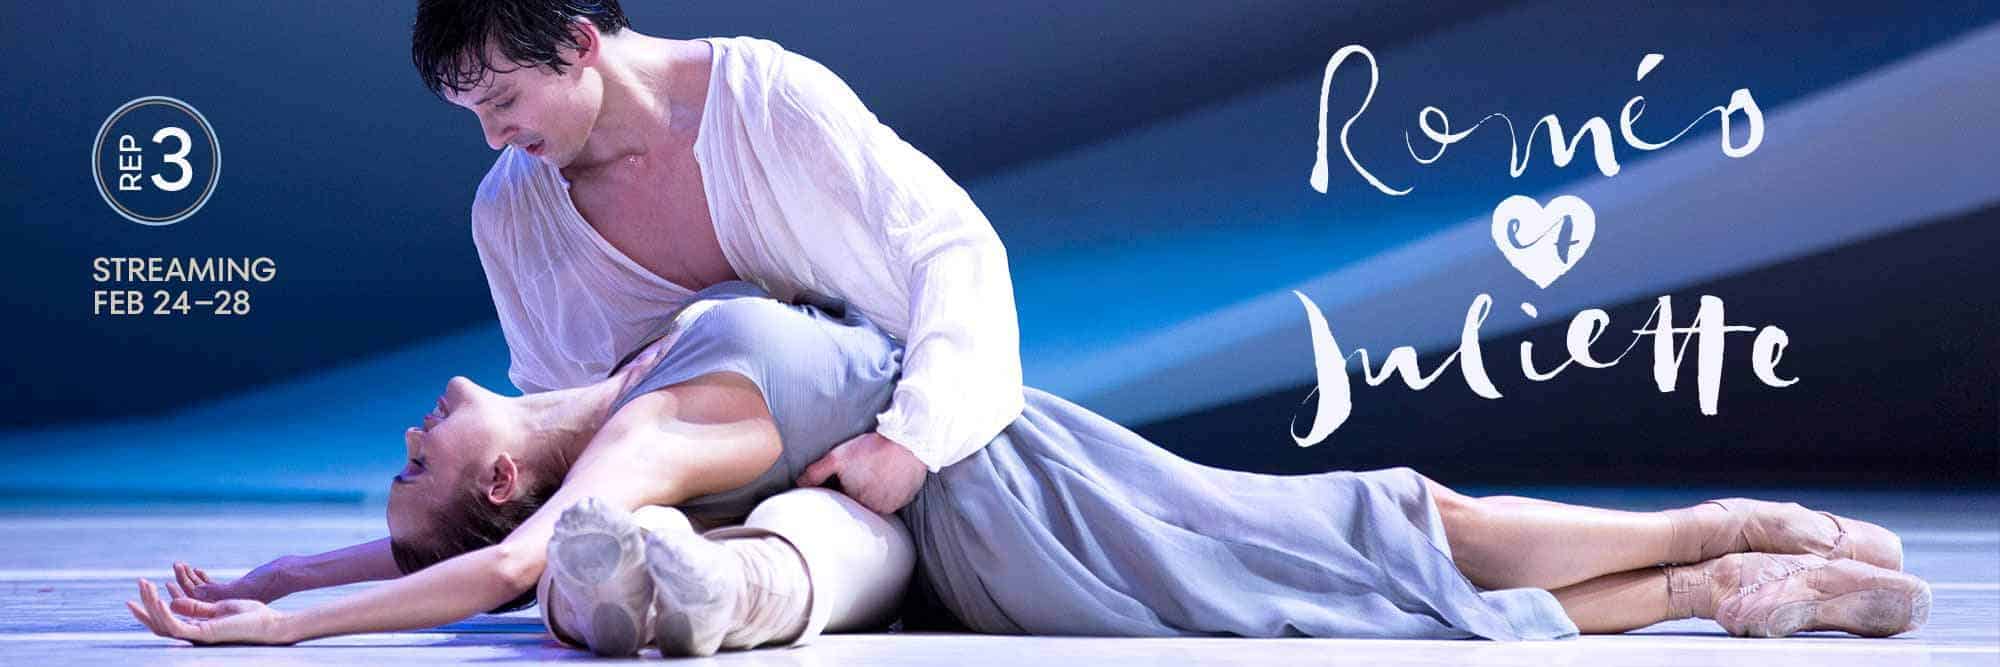 Digital performance of Romeo et Juliette streaming February 24-28.